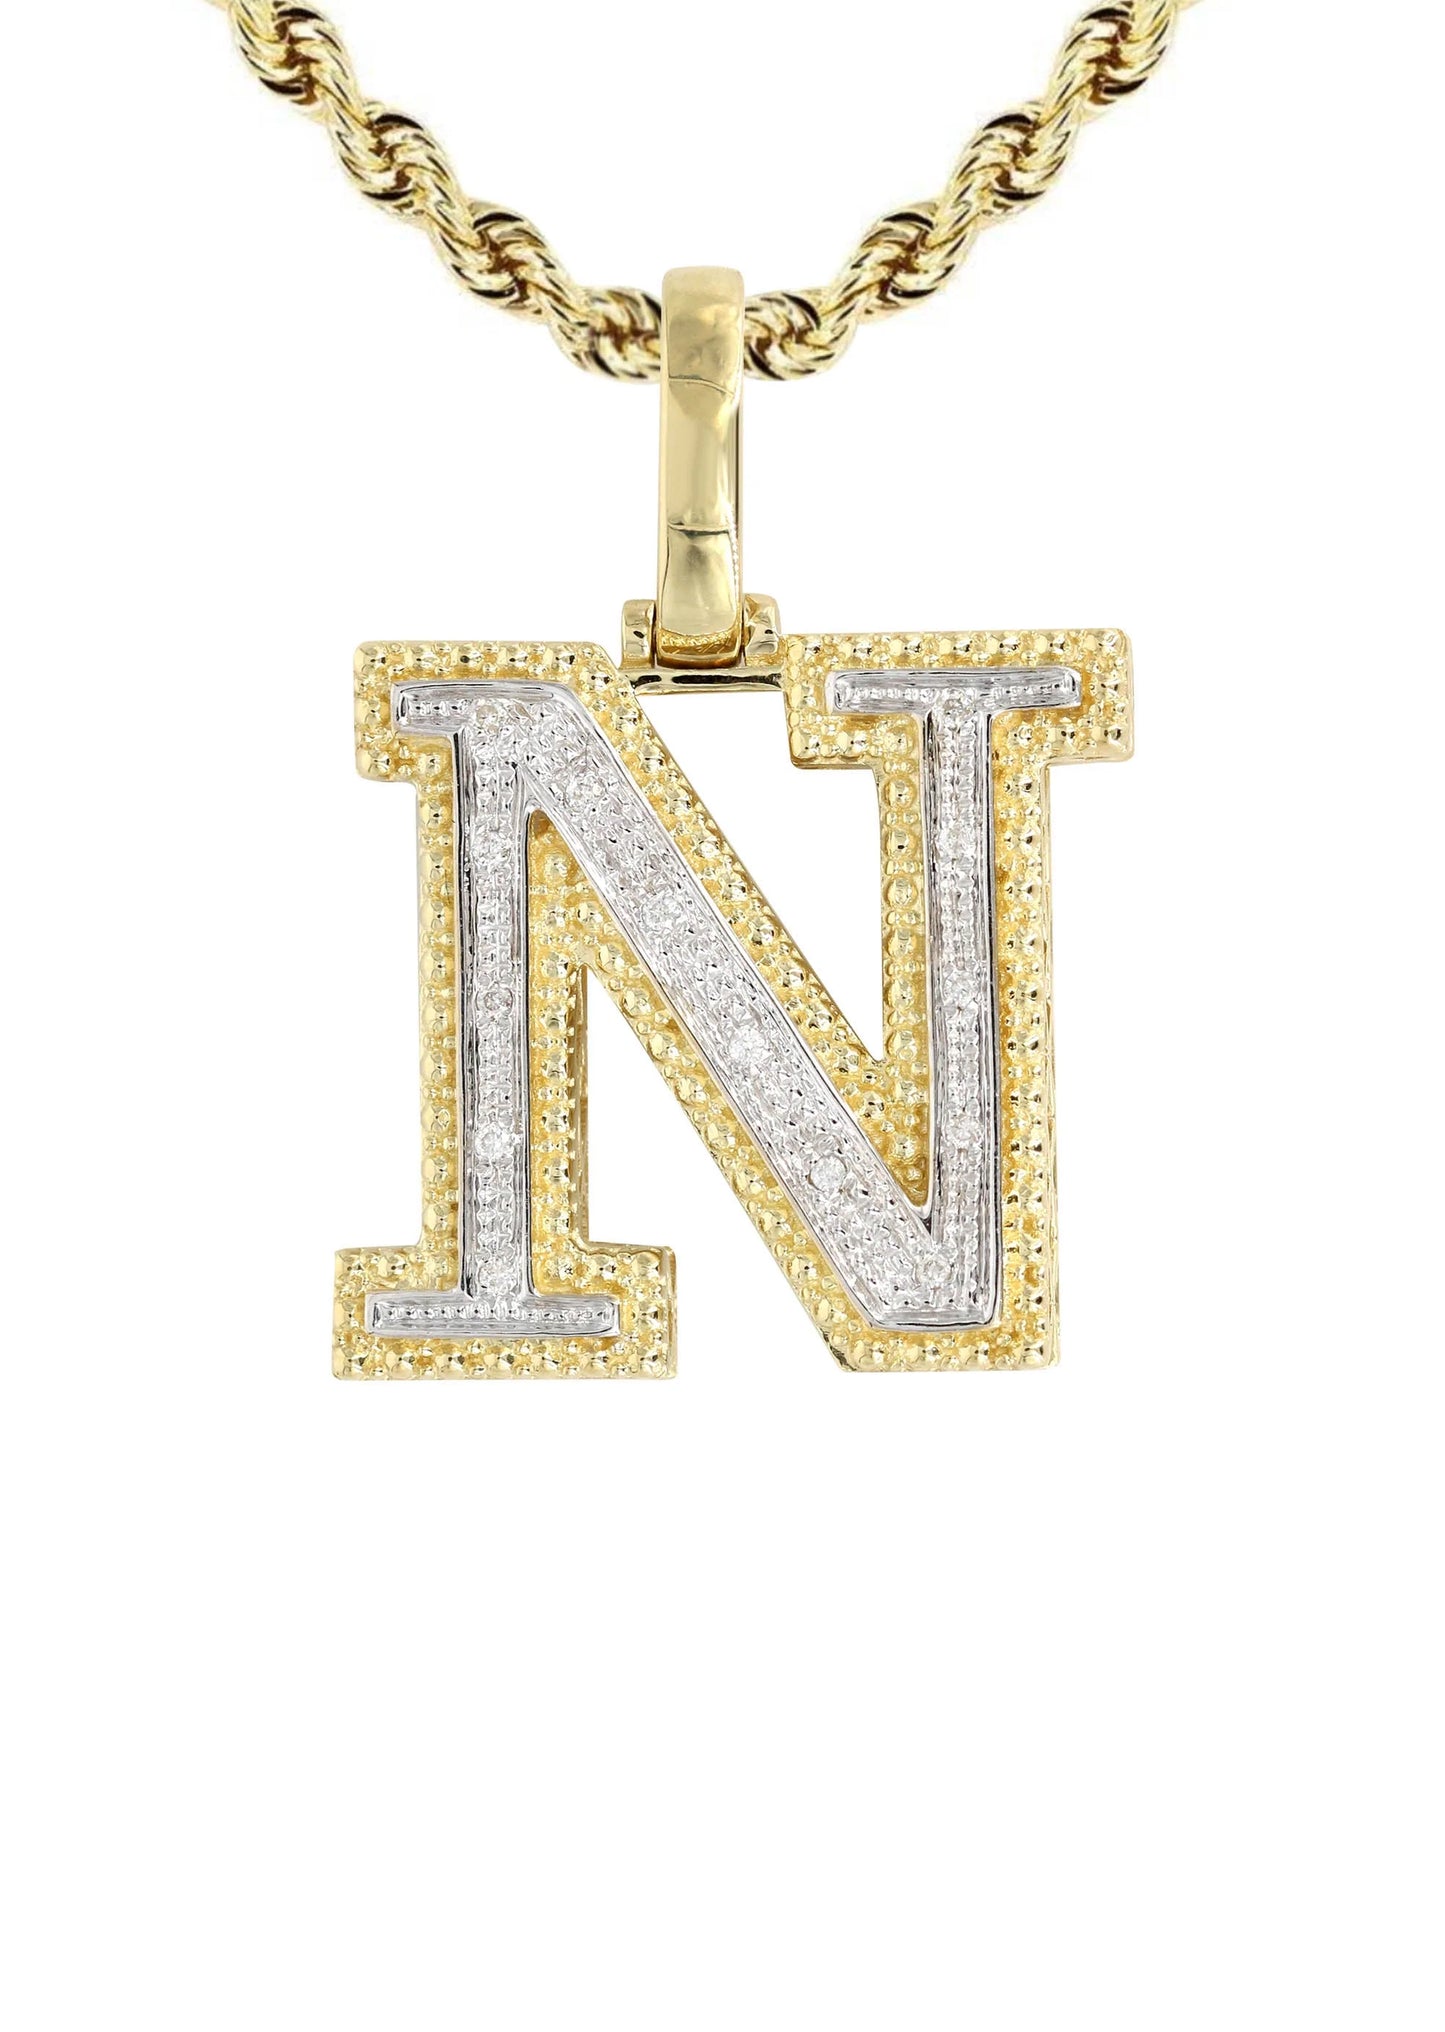 10k Yellow Gold Diamond Pendant Letter "N"